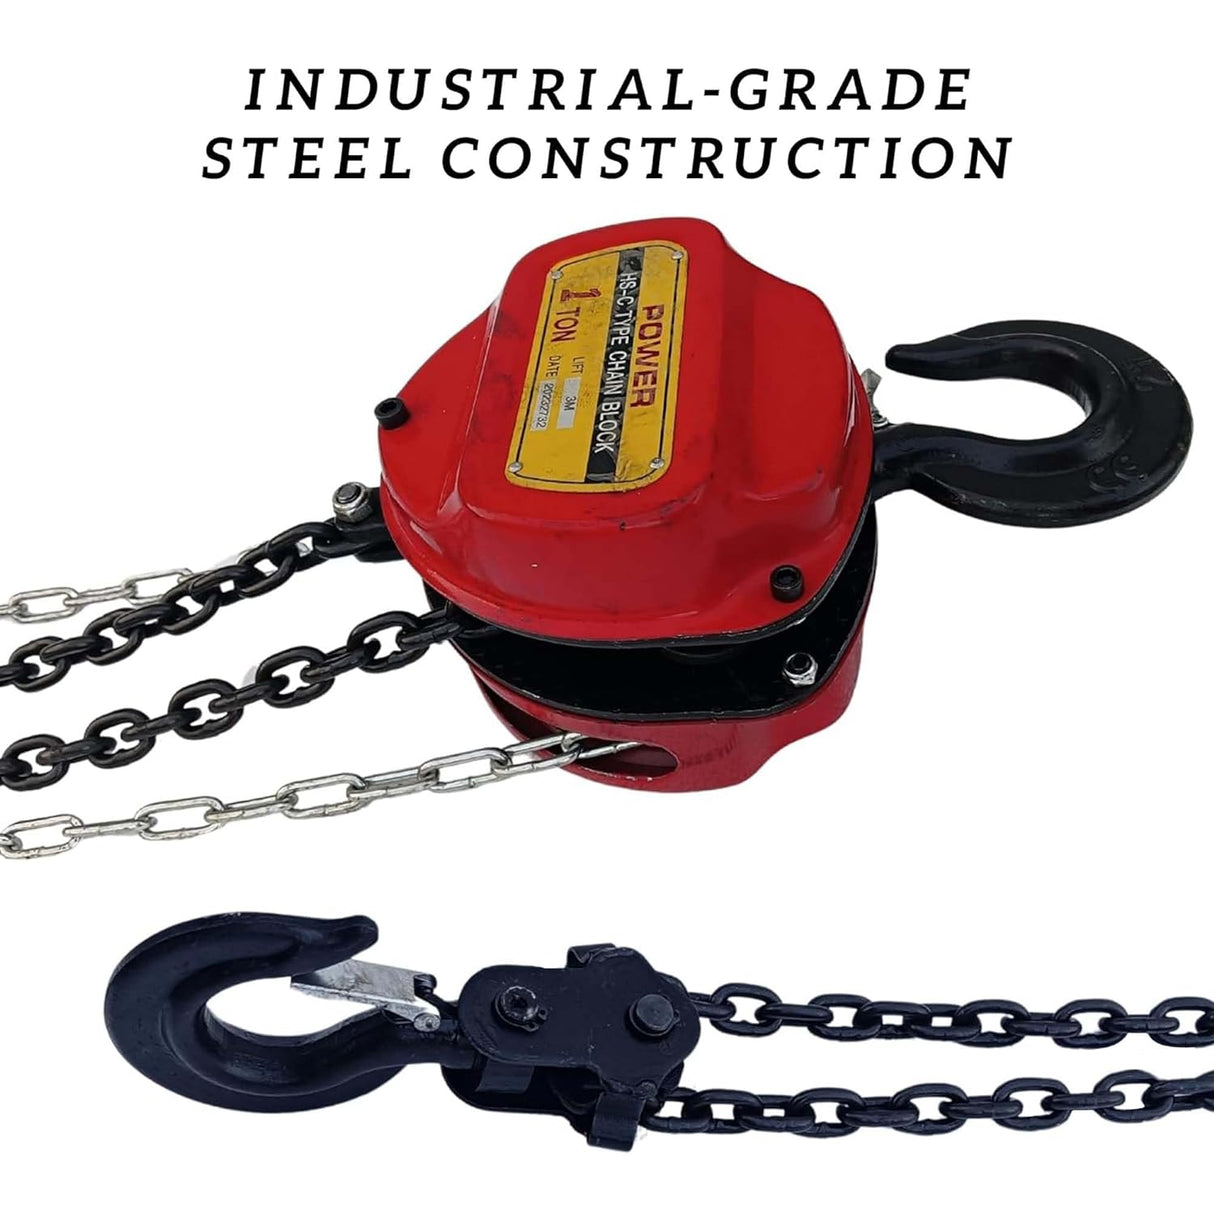 Hand Chain Pulley Block 1 & 2 Ton Capacity Manual Hand Hoist 8mm/ 3m Lift Industrial-Grade Steel